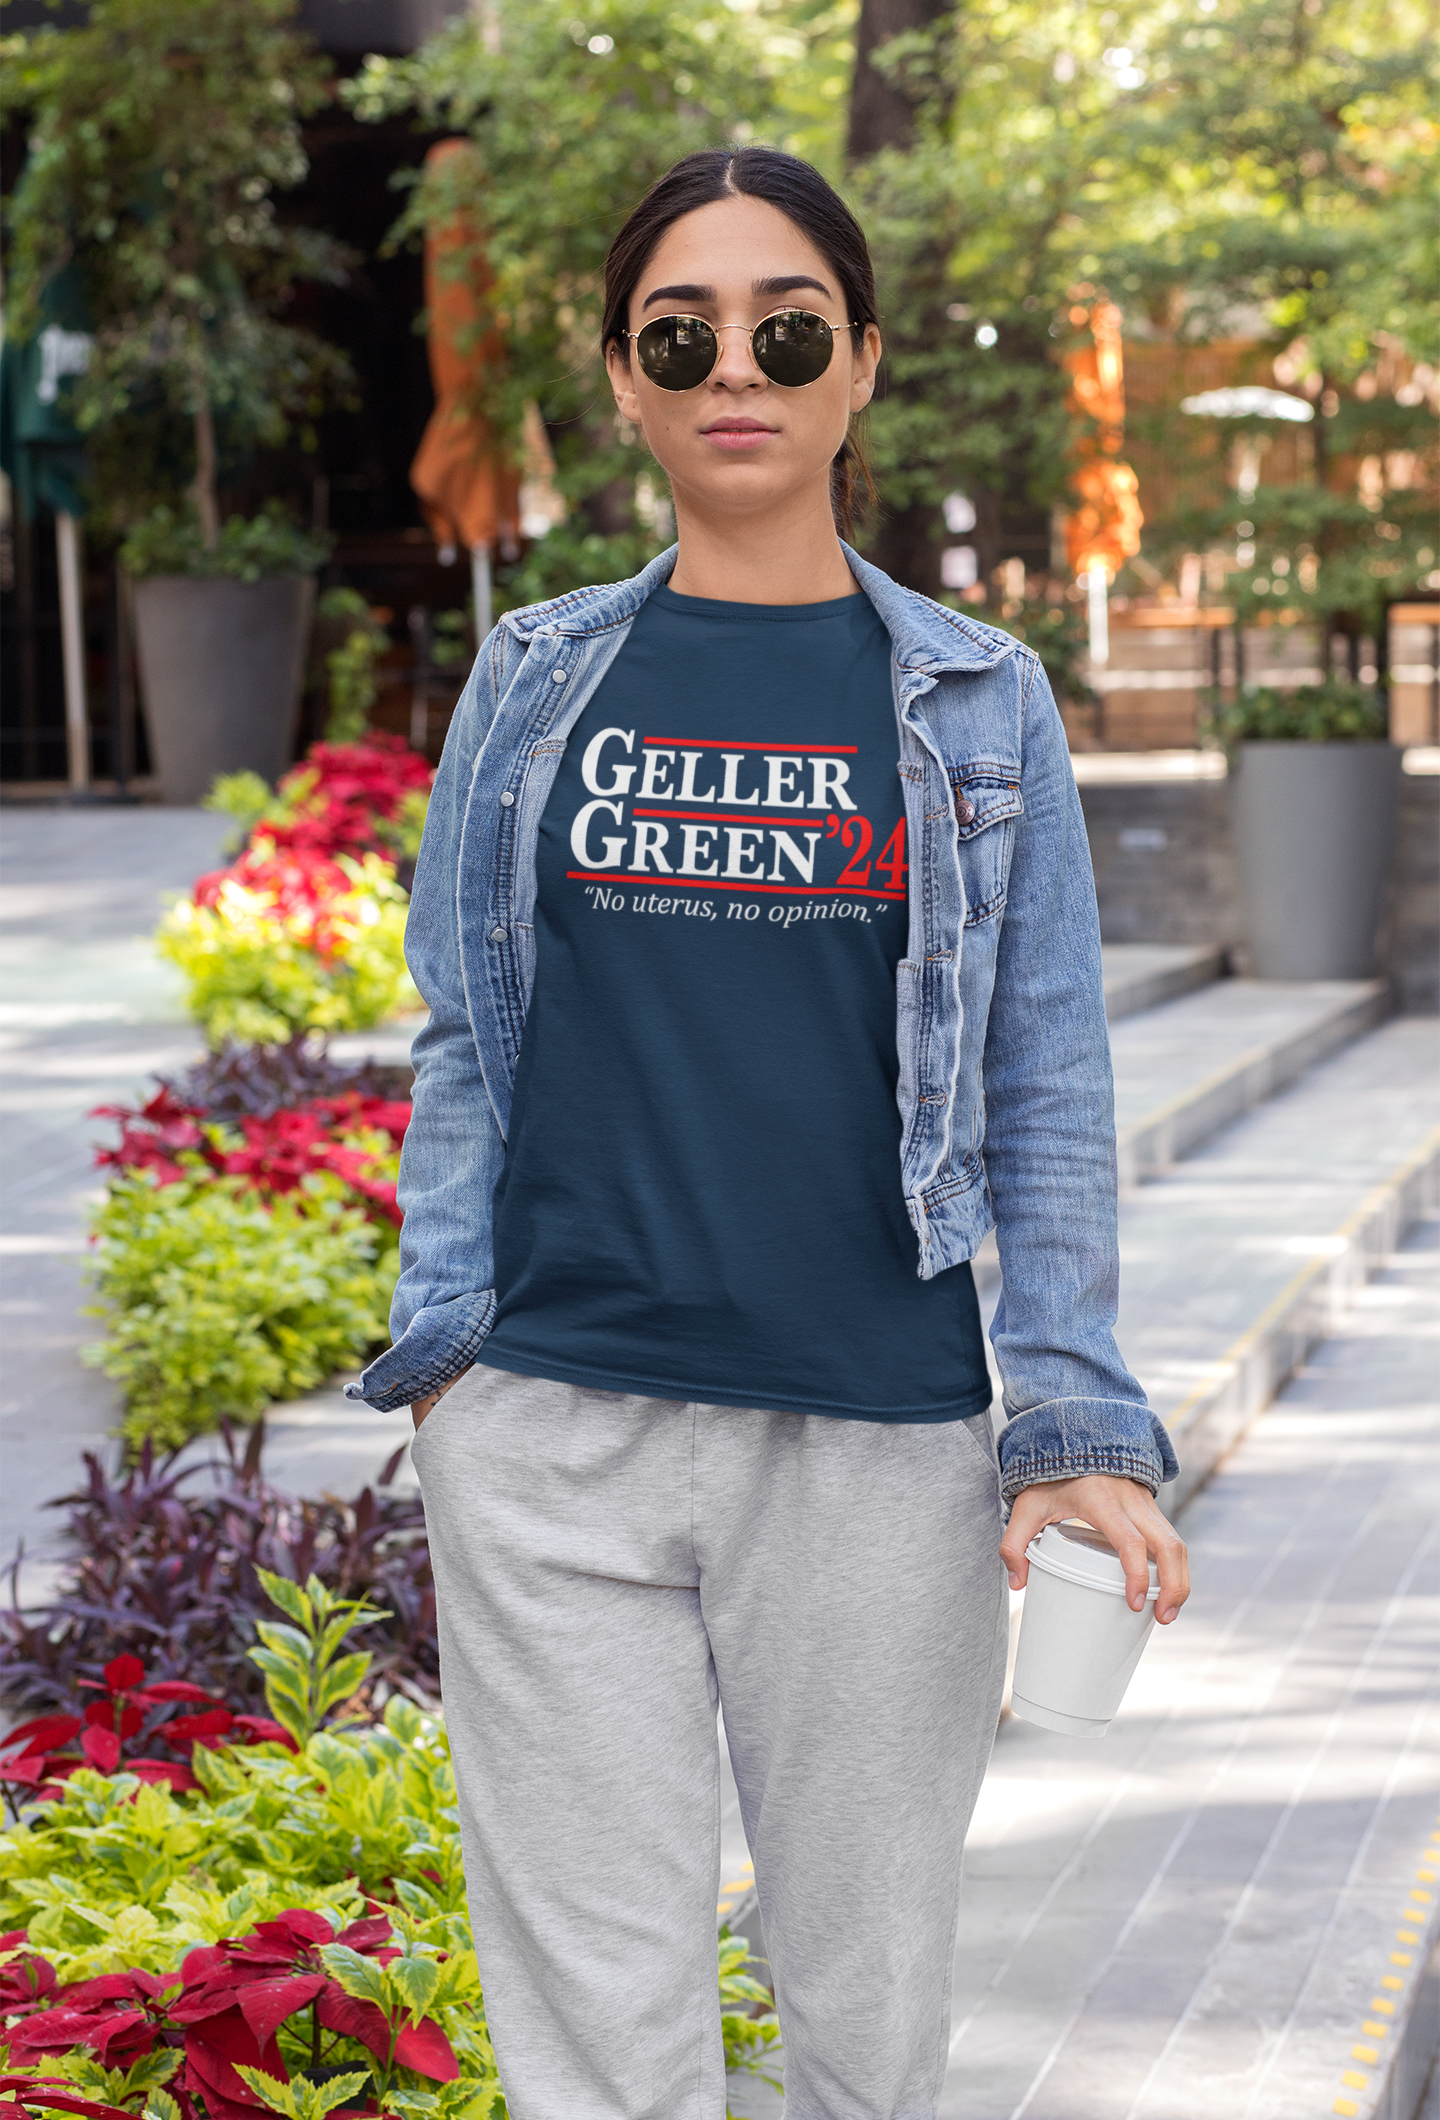 Geller Green 2024 Election